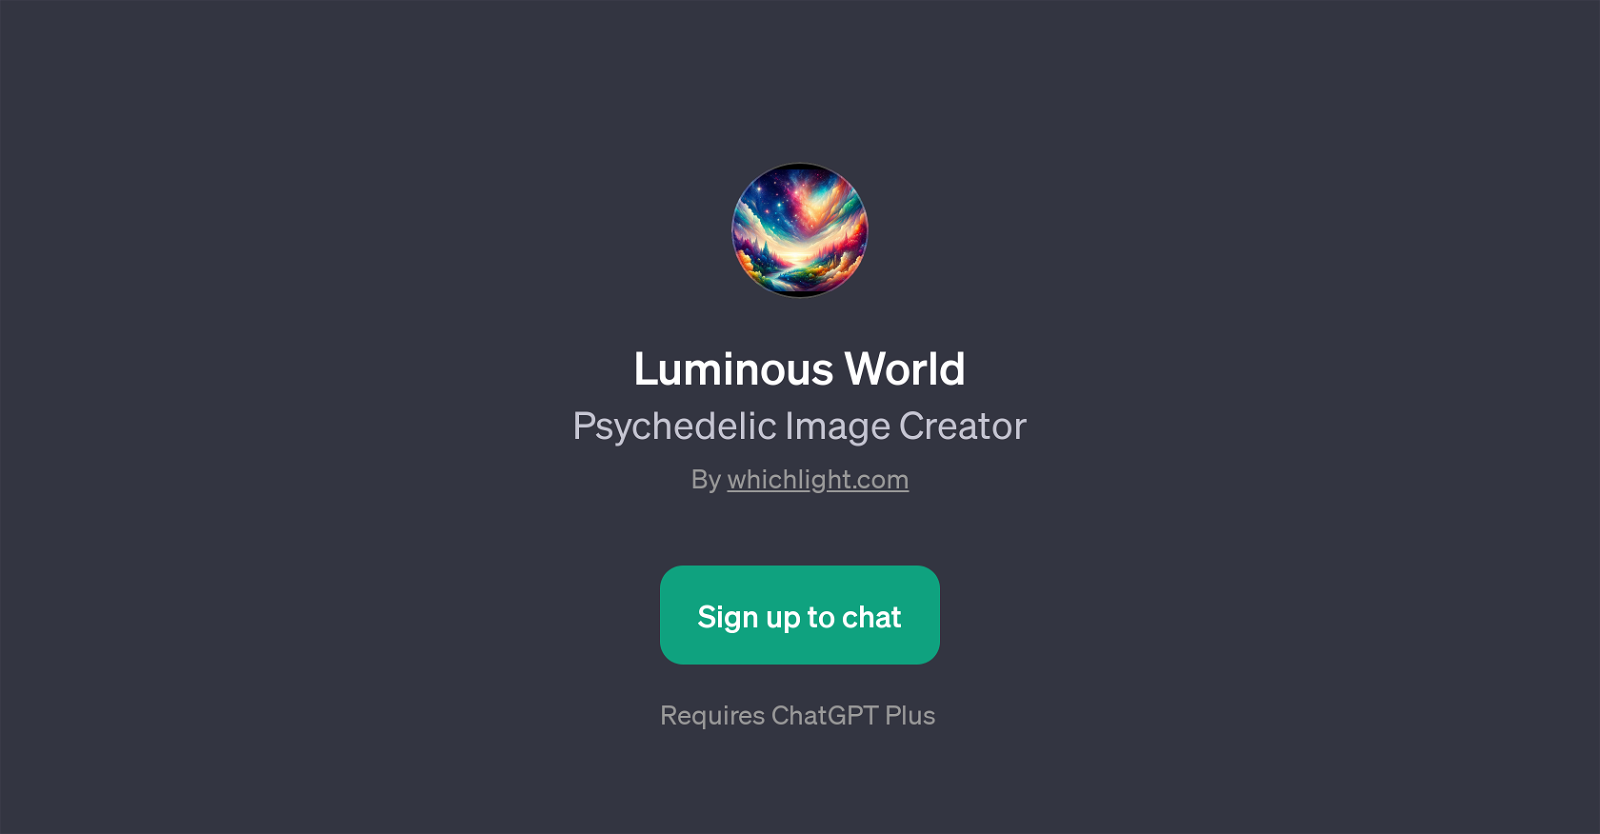 Luminous World website